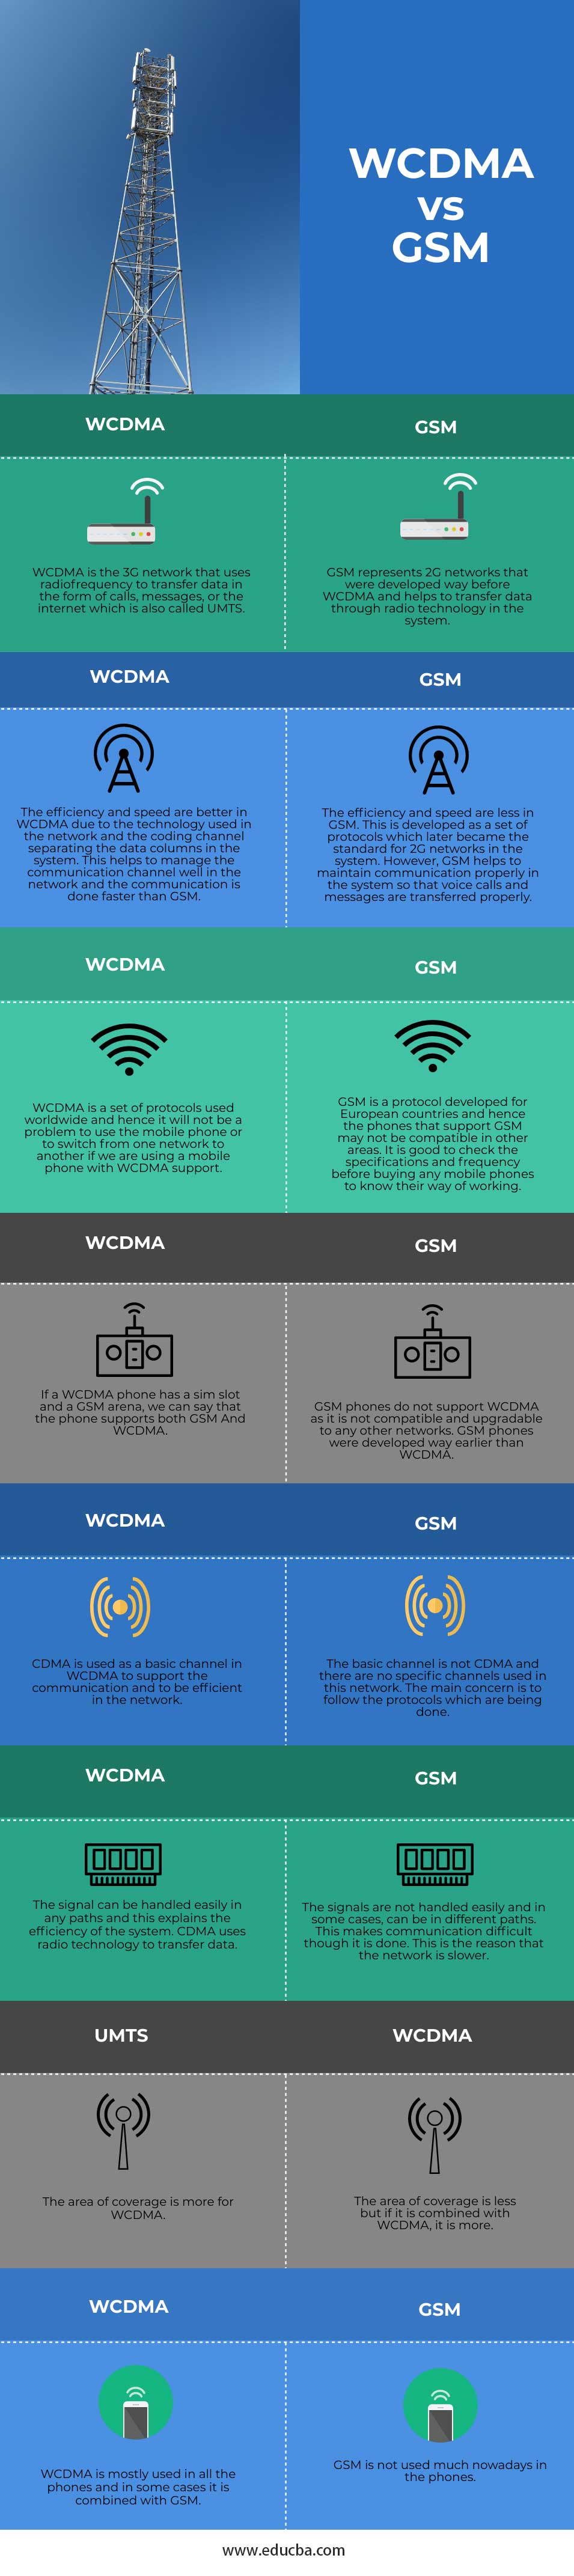 WCDMA-vs-GSM-info